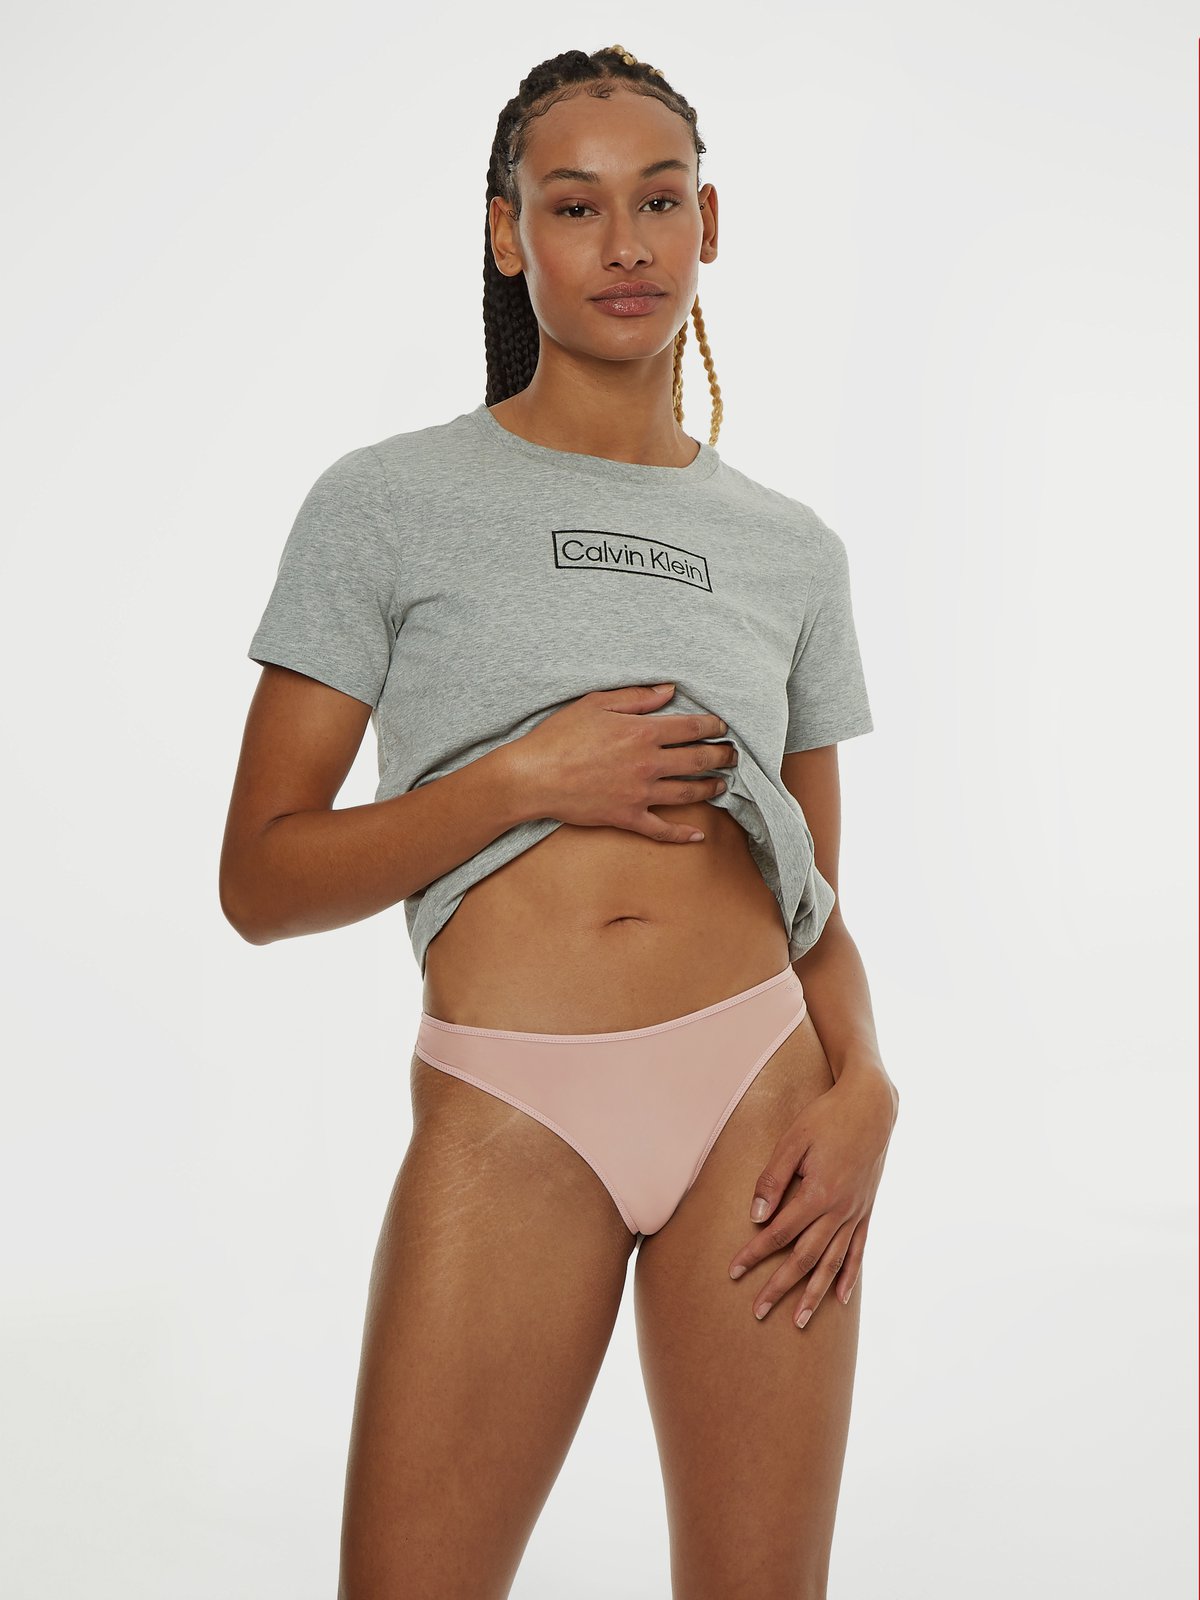 Women's panties light pink Calvin Klein Underwear